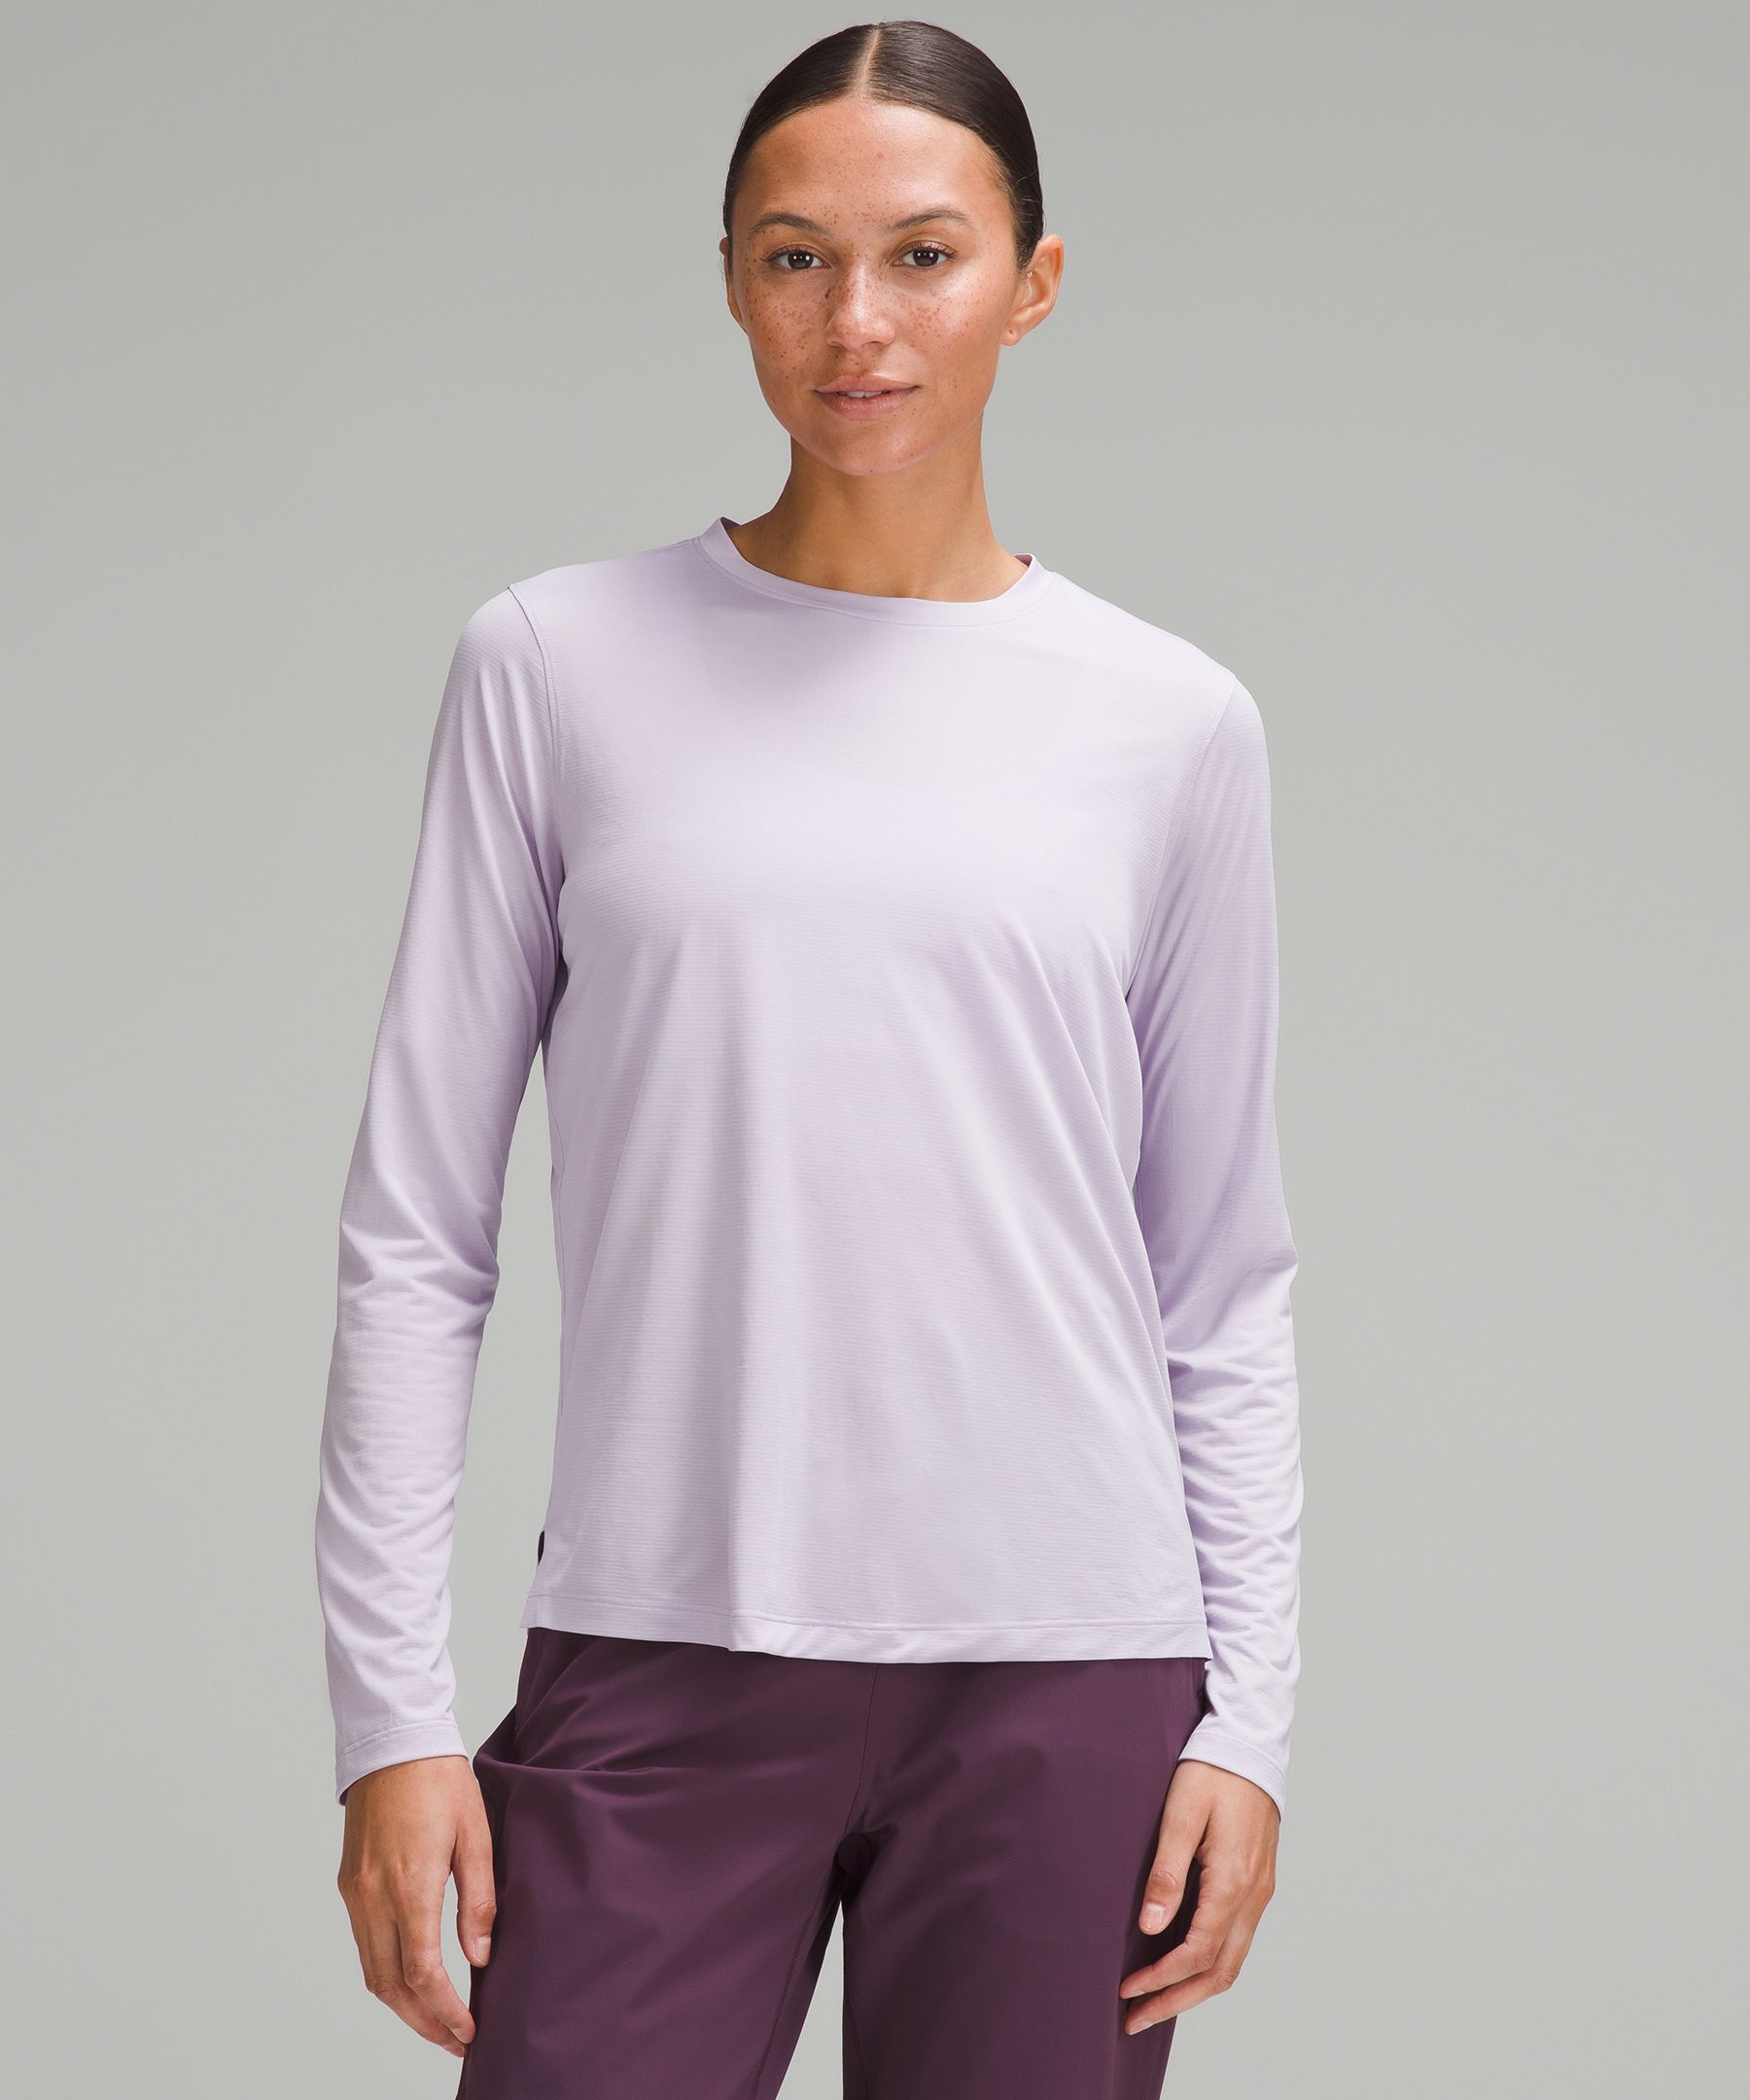 Sexy Dance Women T-shirt Long Sleeve Sweatshirt Crew Neck Pullover Warm Tops  Pink XL 